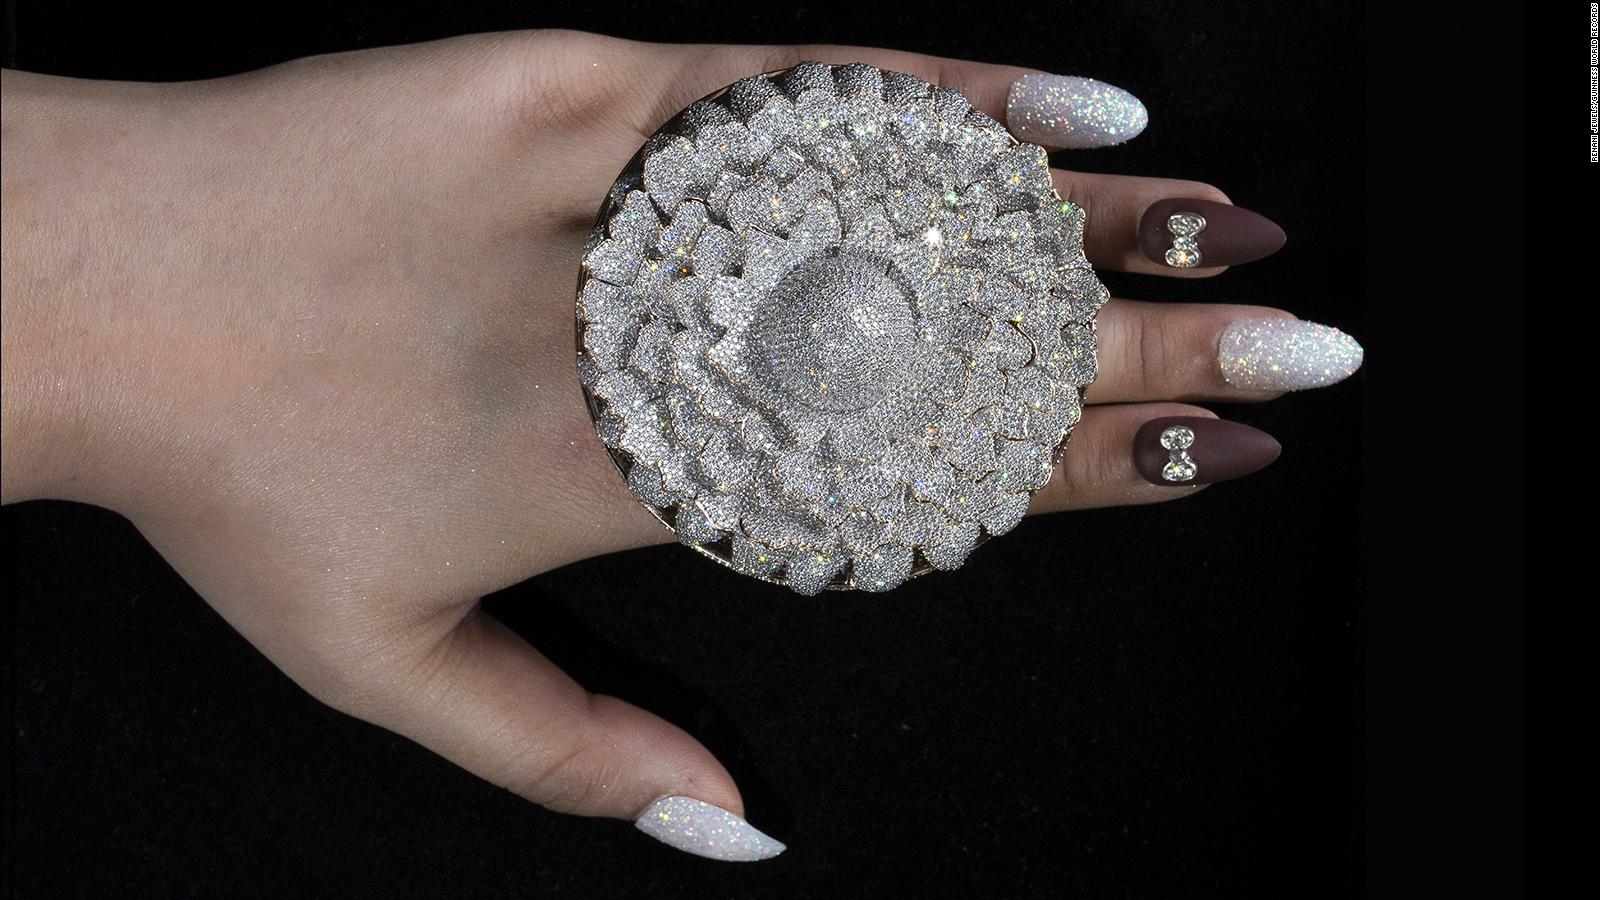 Schat Ventileren Prestigieus A ring with 12,638 diamonds sets a Guinness World Record - CNN Style